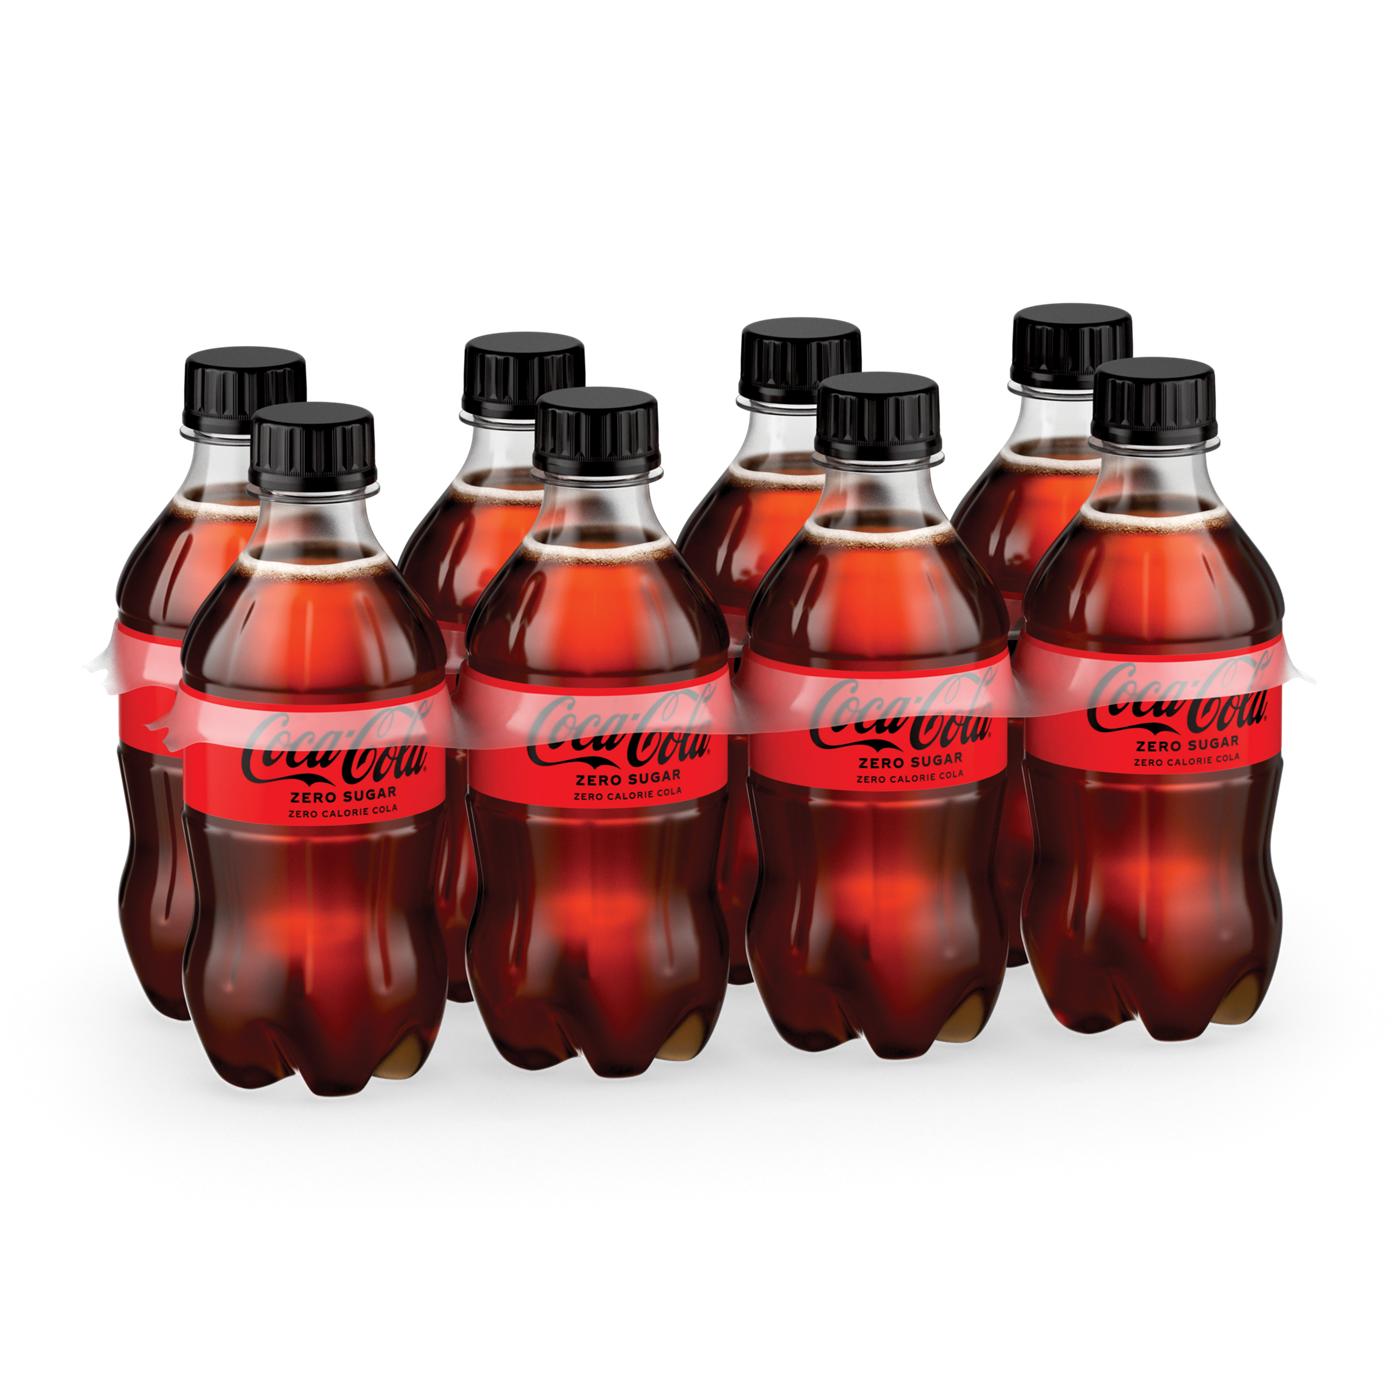 Coca-Cola Zero Sugar Coke 12 oz Bottles; image 6 of 7